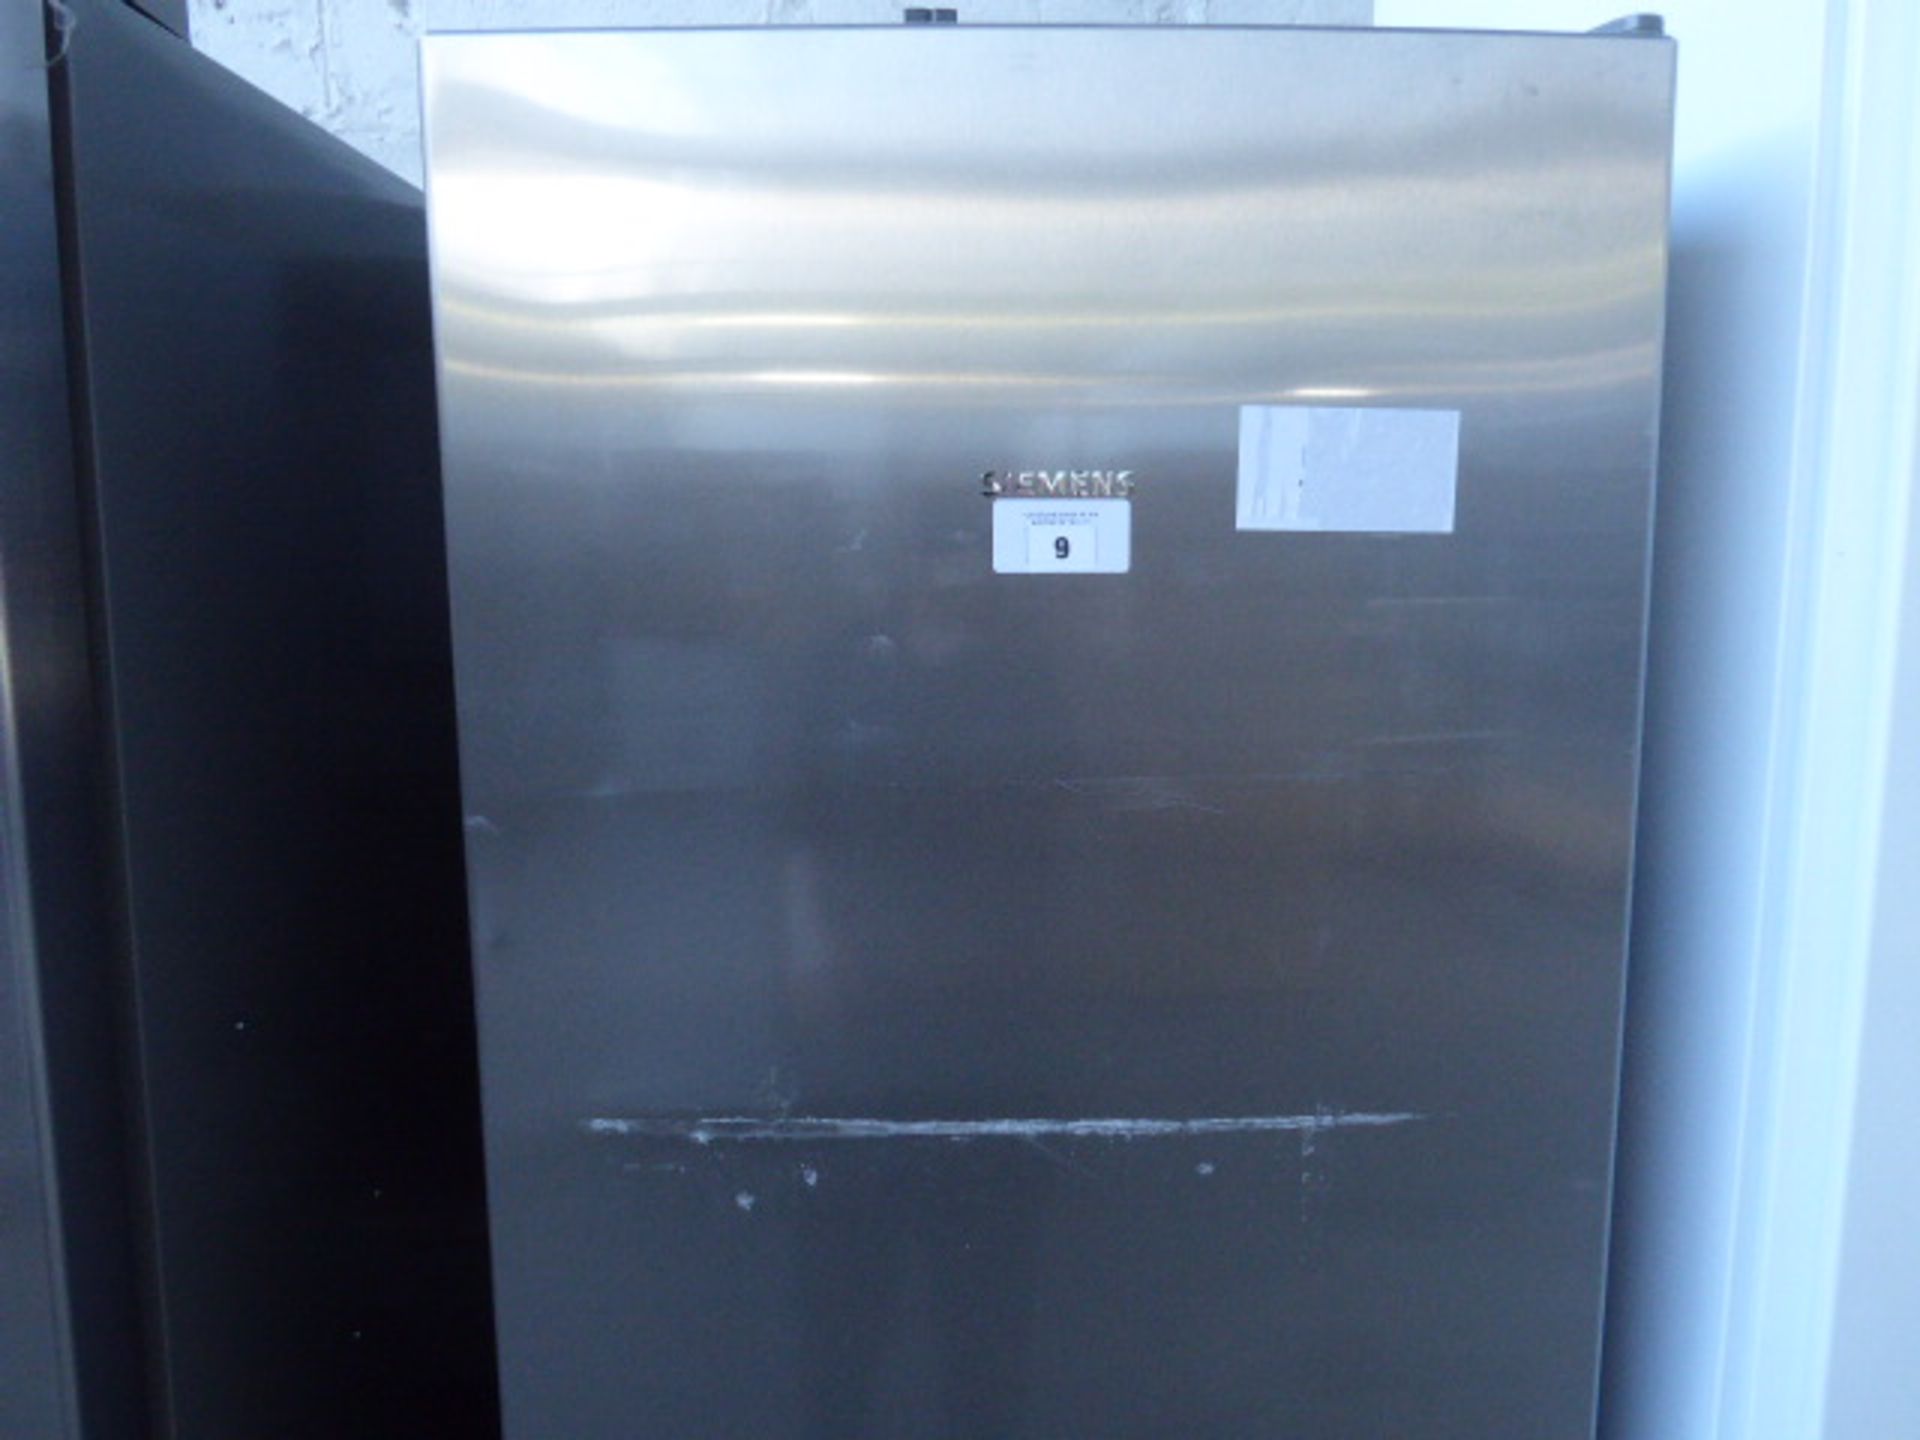 KG33VVIEAGB Siemens Free-standing fridge-freezer - Image 2 of 4